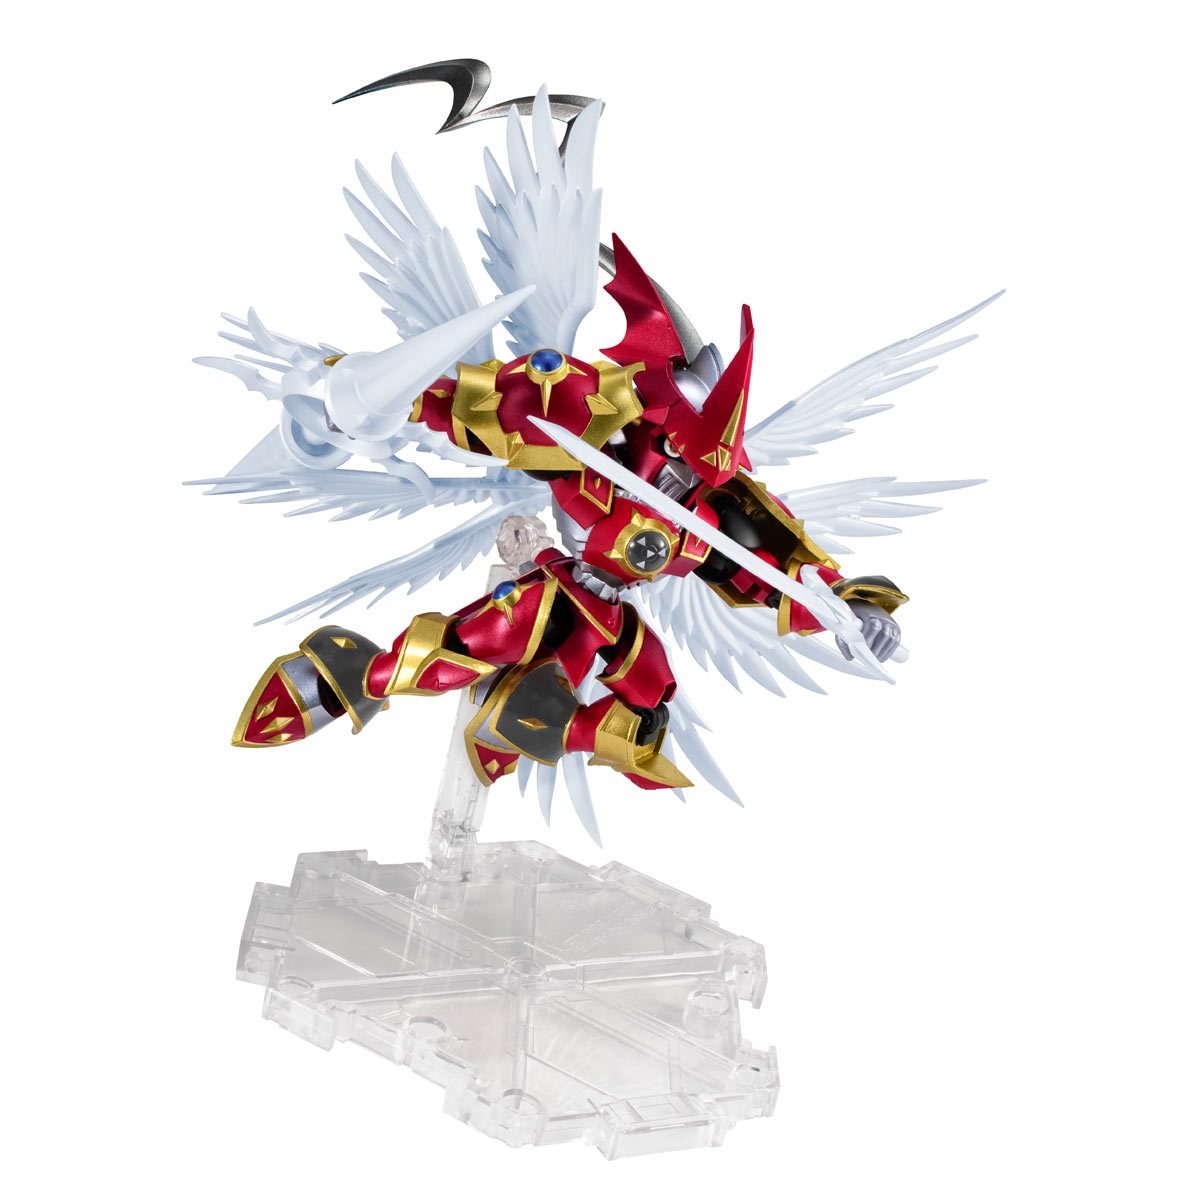 Bandai Tamashii Nations NXEDGE: Digimon Tamers - Gallantmon Modo Carmesi Figura de Accion